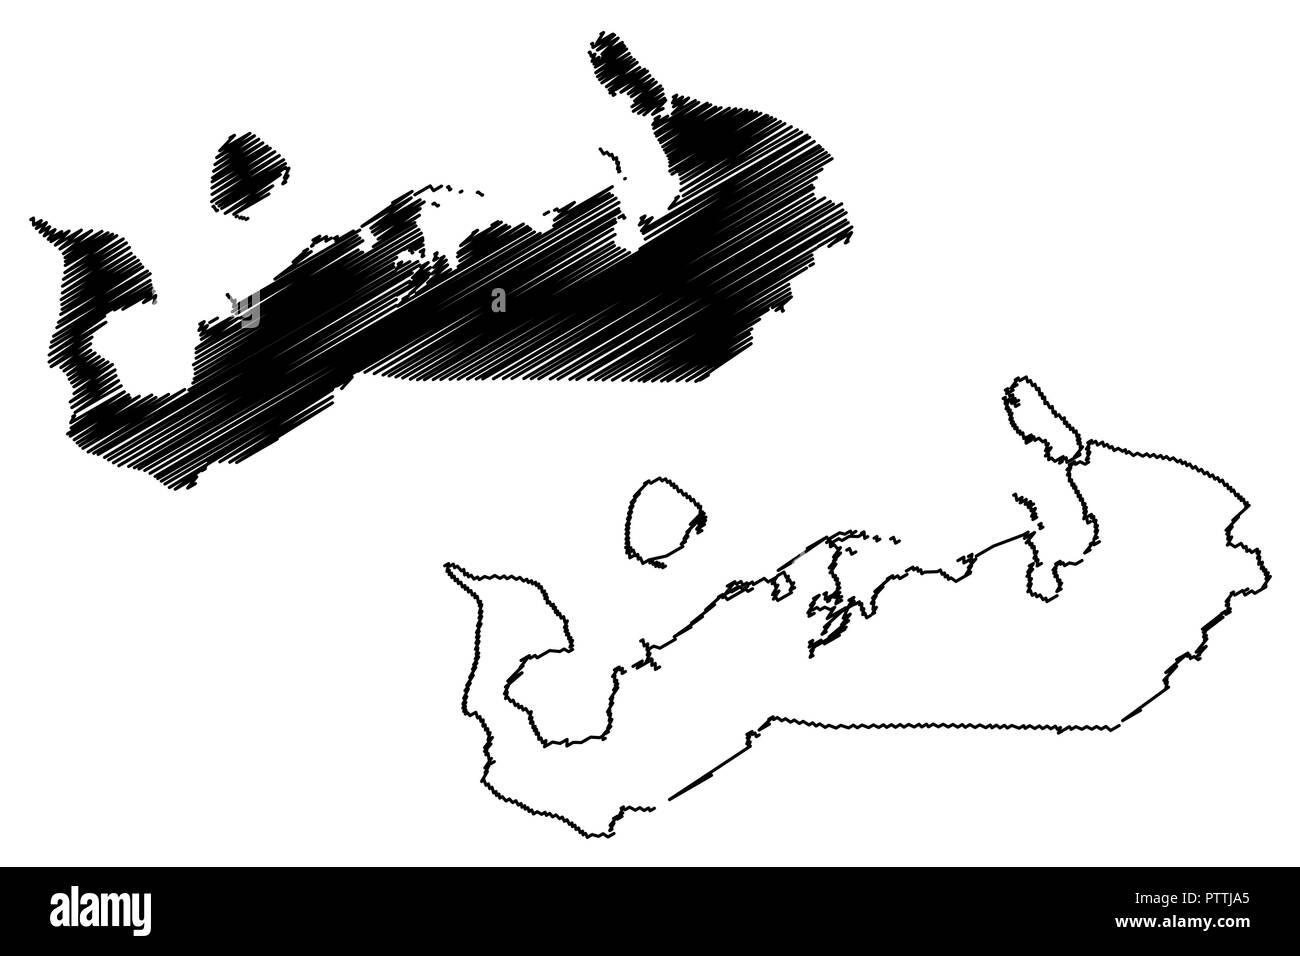 Sakhalin (Russland, Subjekte der Russischen Föderation, autonomen Okrug) Karte Vektor-illustration, kritzeln Skizze Stadt Bukarest Okr Stock Vektor